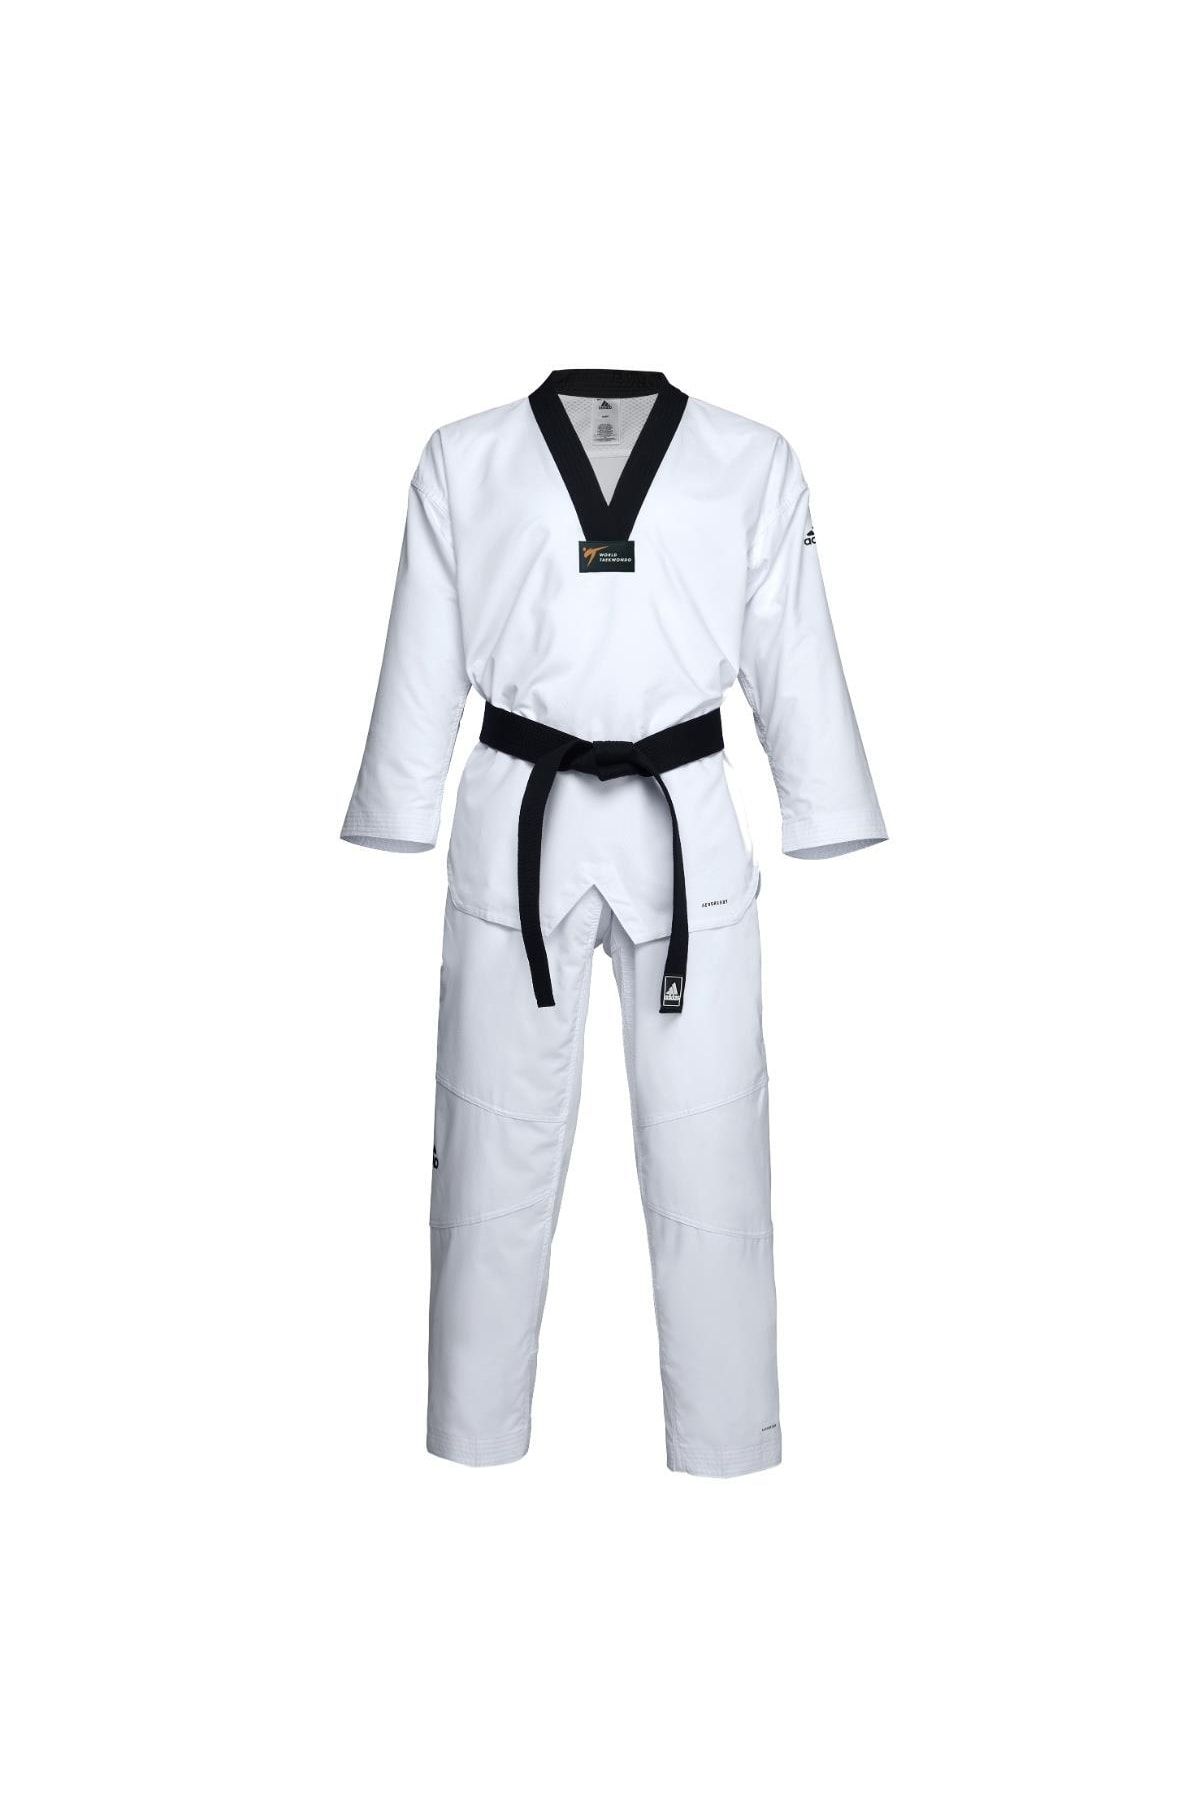 adidas Adı-fıghter Primegreen Wt Onaylı Taekwondo Elbisesi